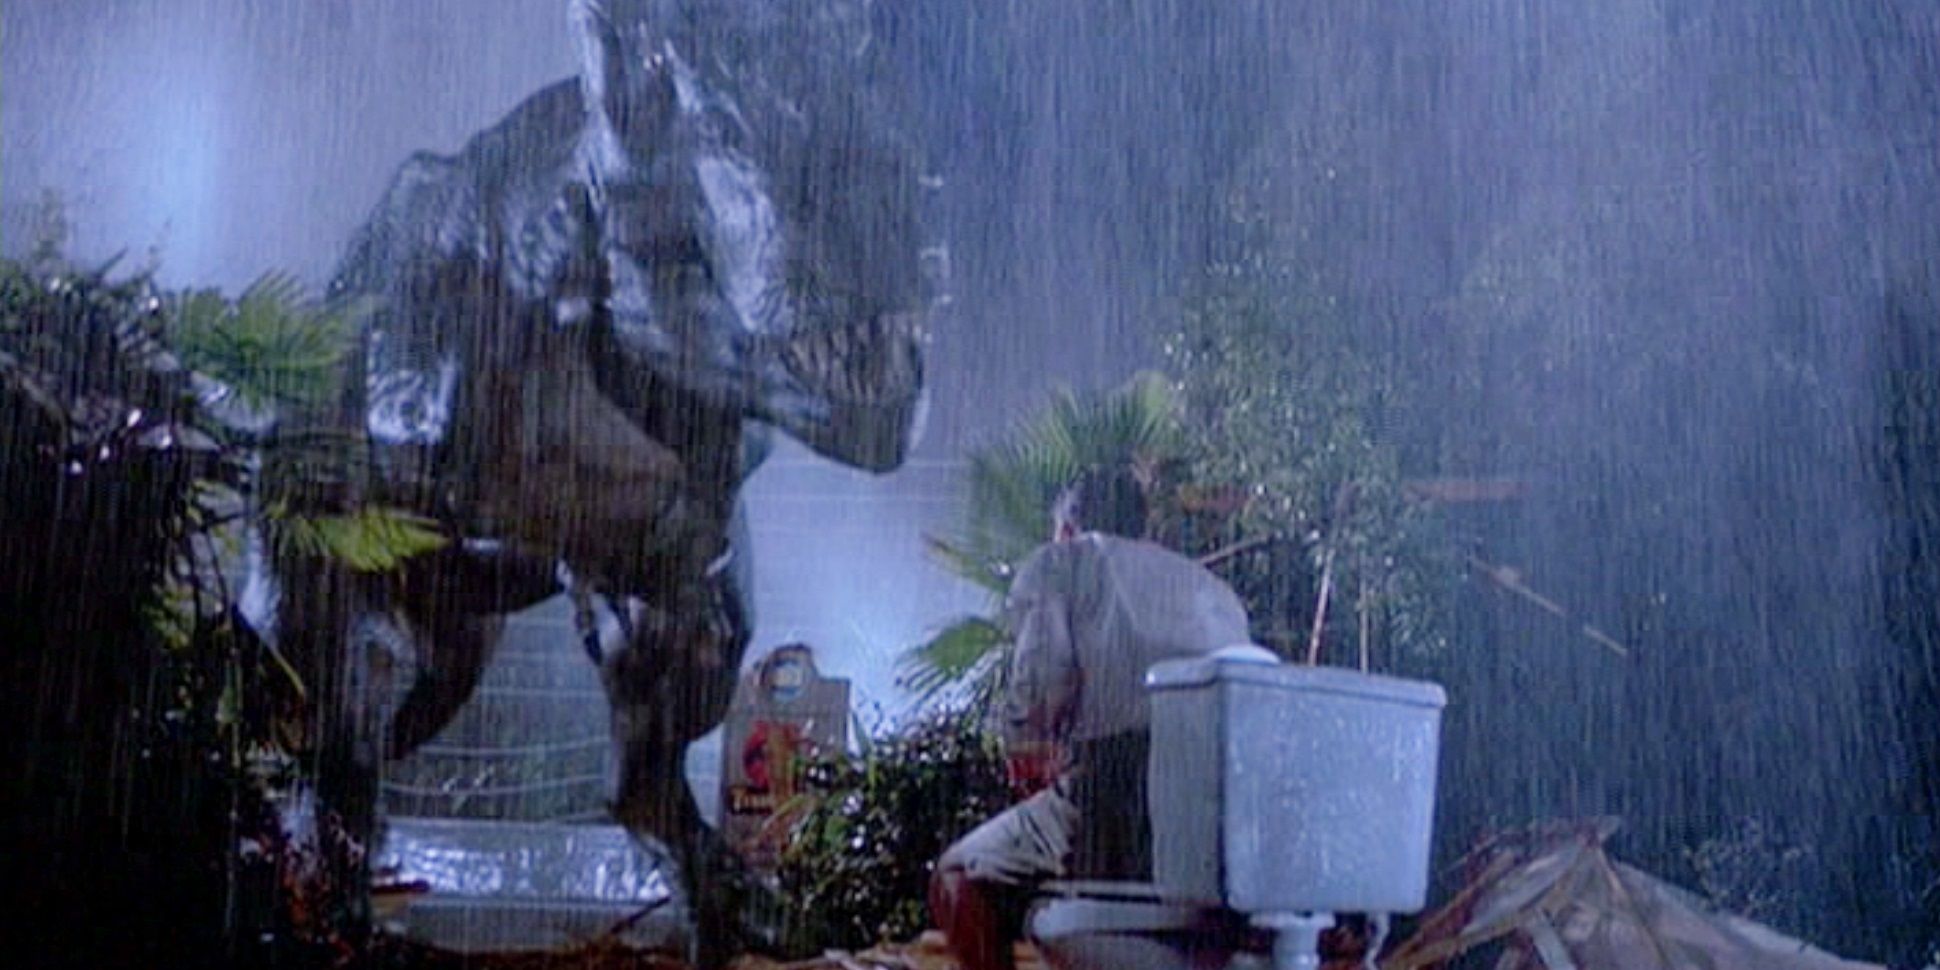 T rex eats Gennaro on the toilet in Jurassic Park